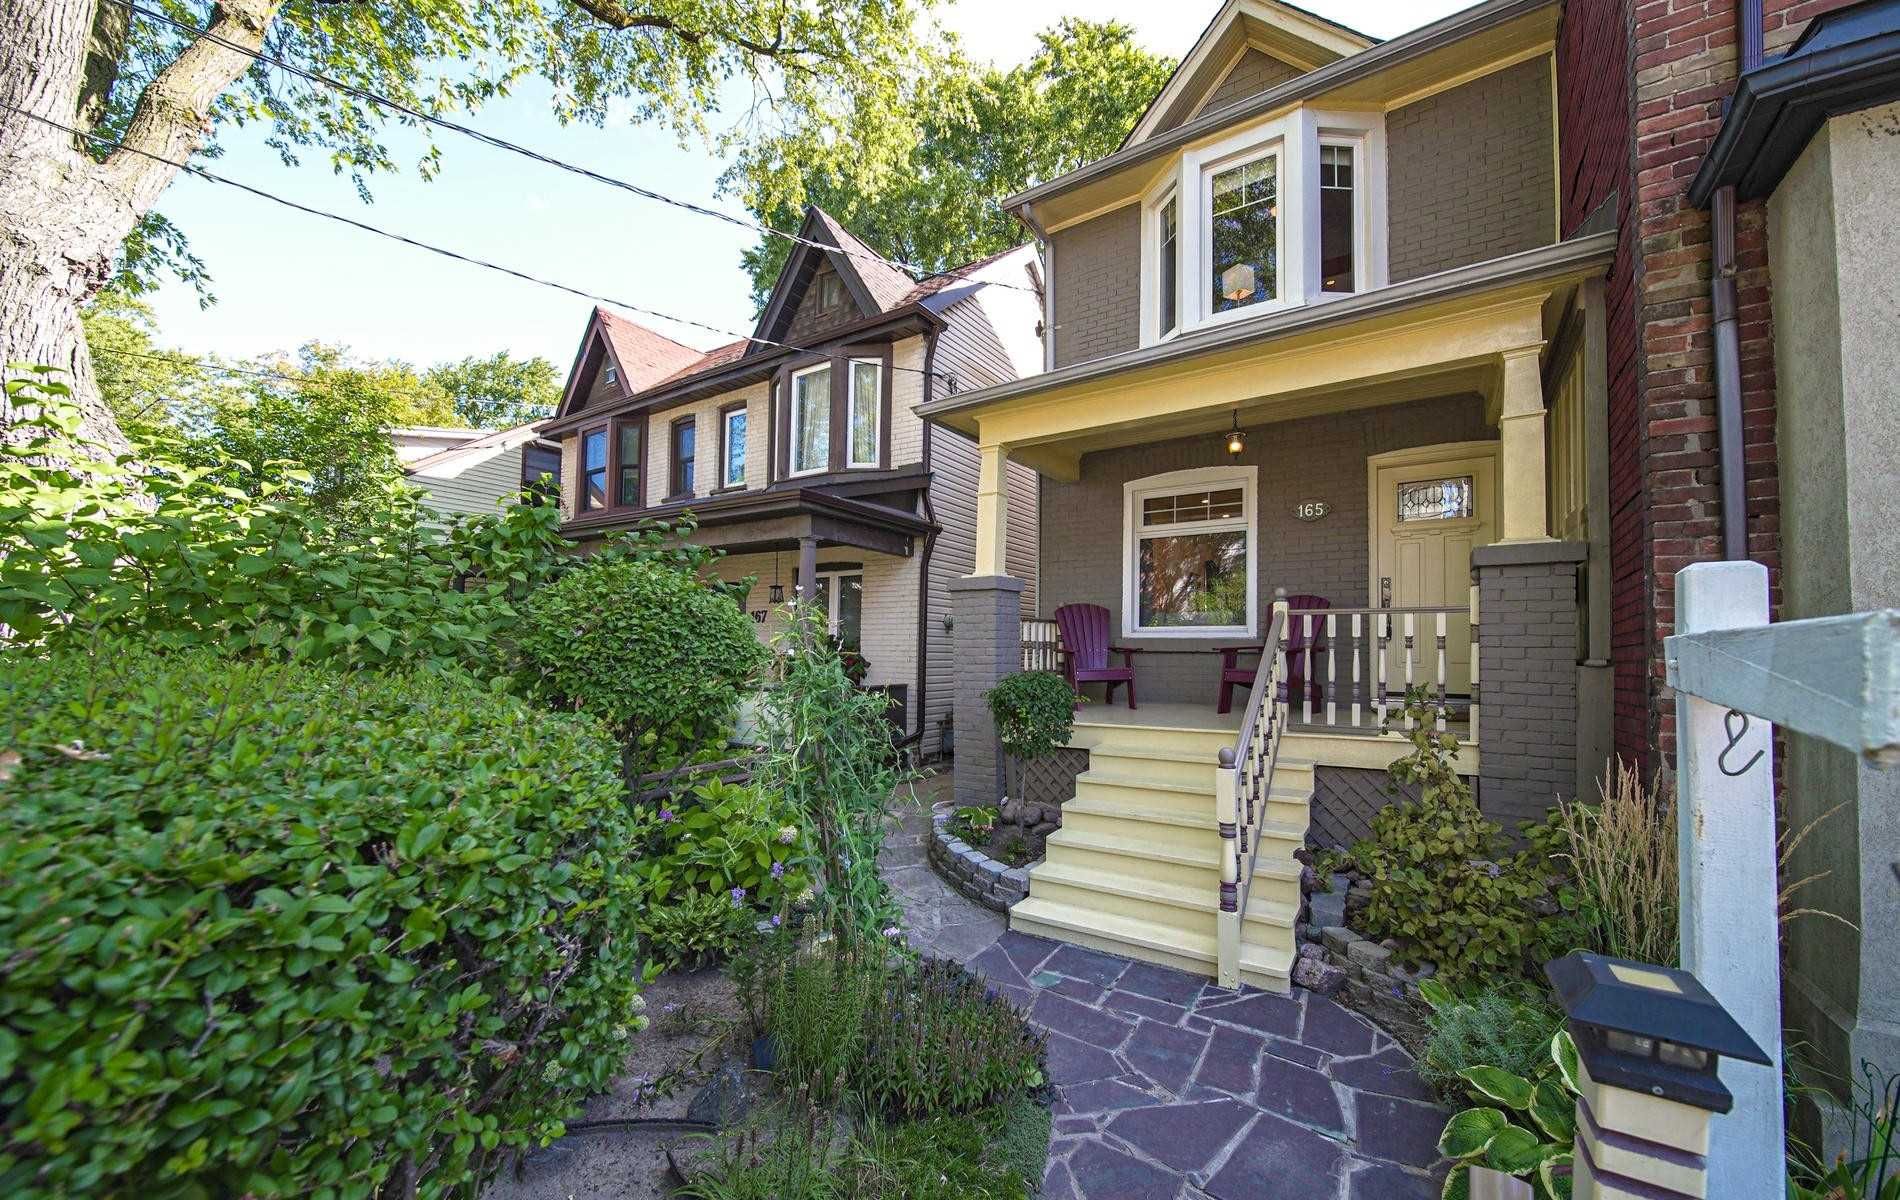 Main Photo: 165 Munro Street in Toronto: South Riverdale House (2-Storey) for sale (Toronto E01)  : MLS®# E4562412